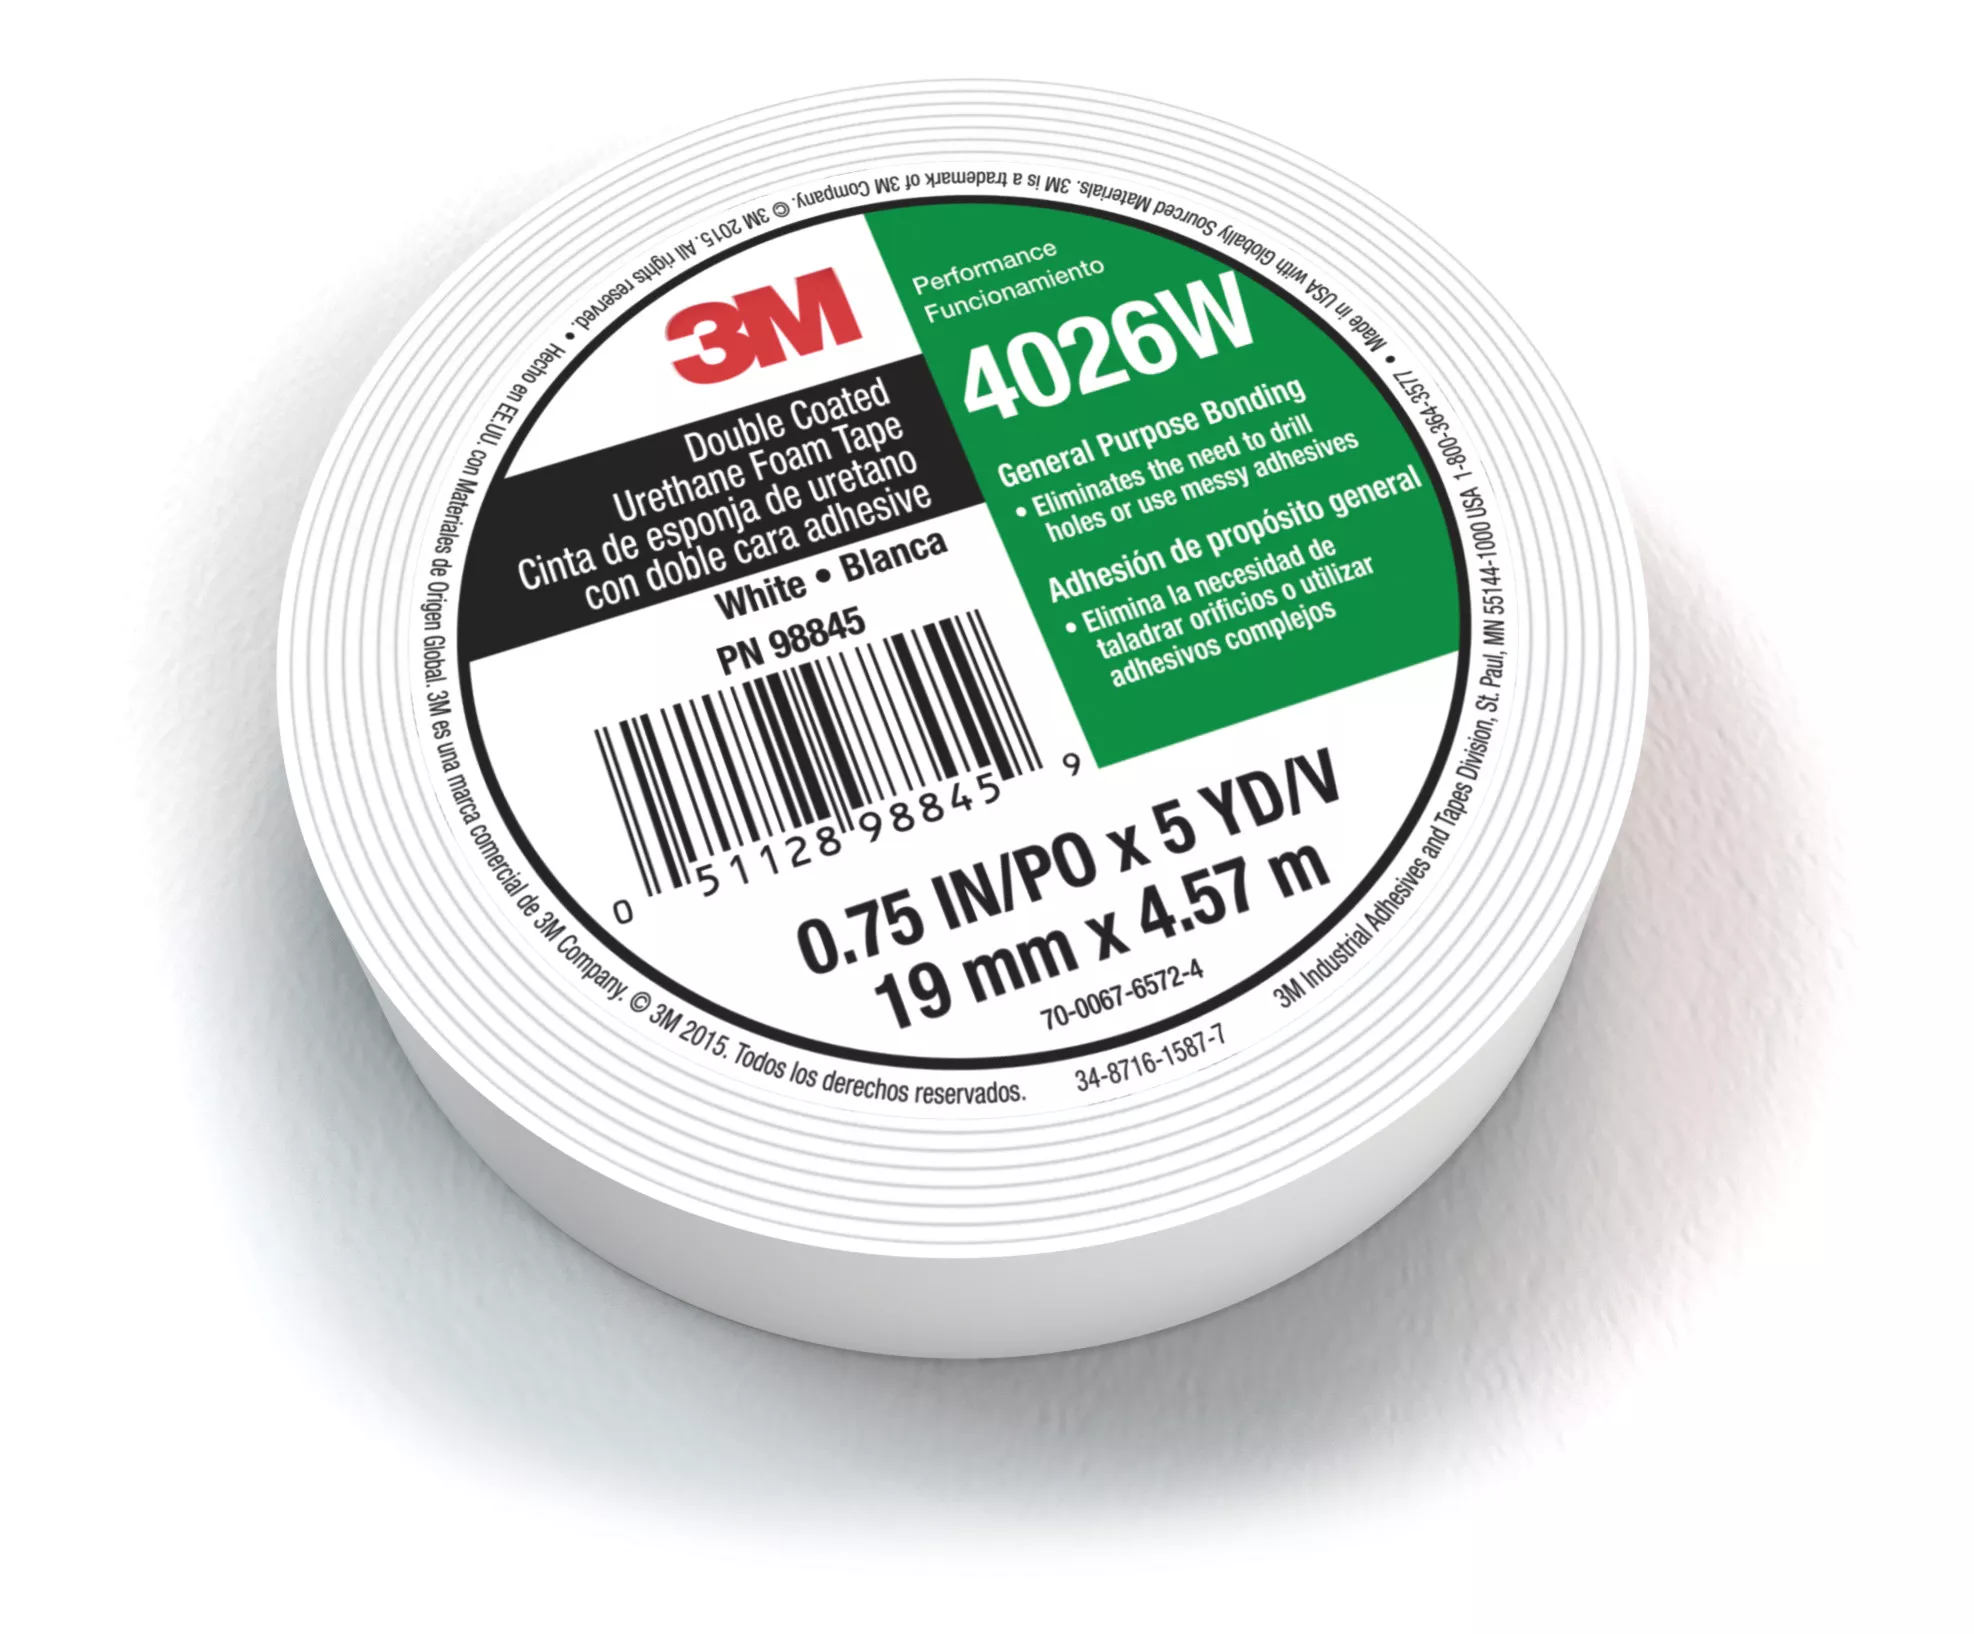 3M™ Double Coated Urethane Foam Tape 4026W, White, 3/4 in x 5 yd, 62
mil, 12 Rolls/Case